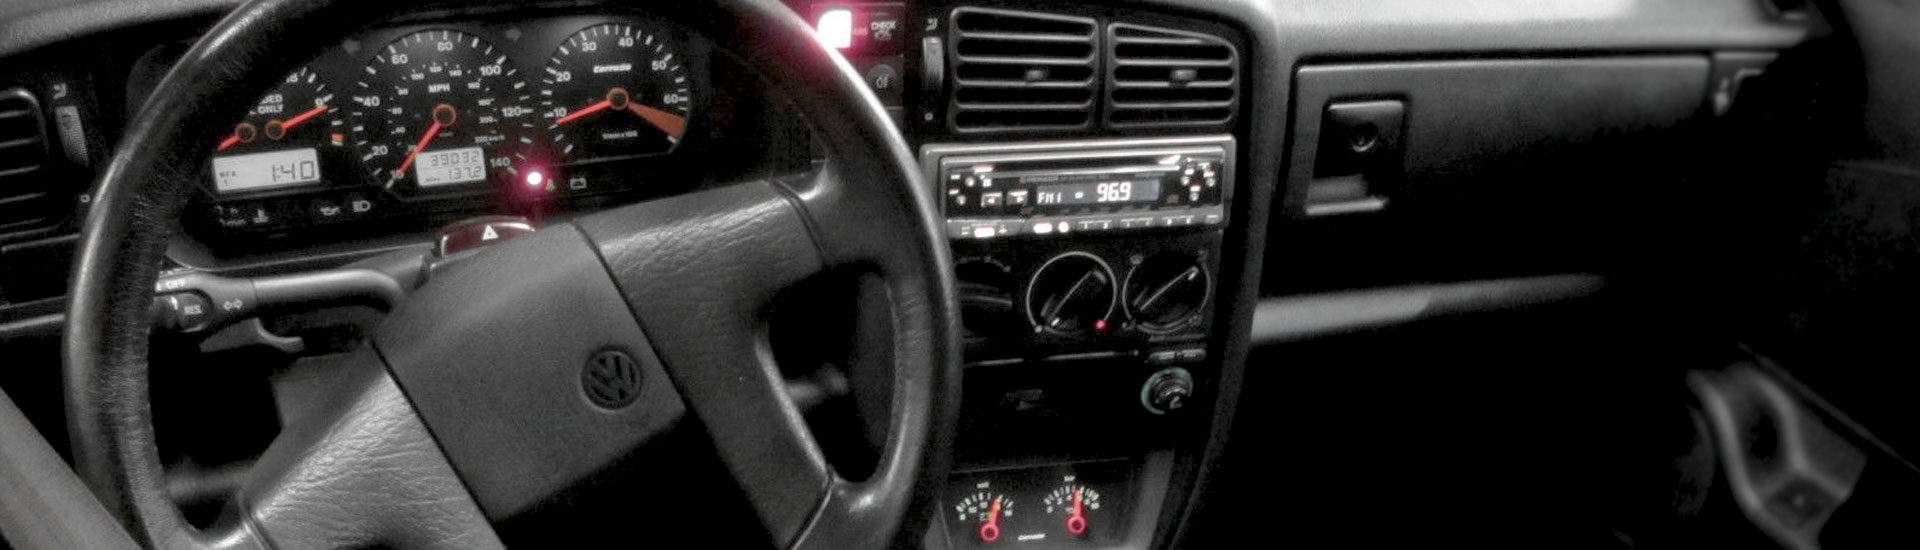 Volkswagen Corrado Custom Dash Kits